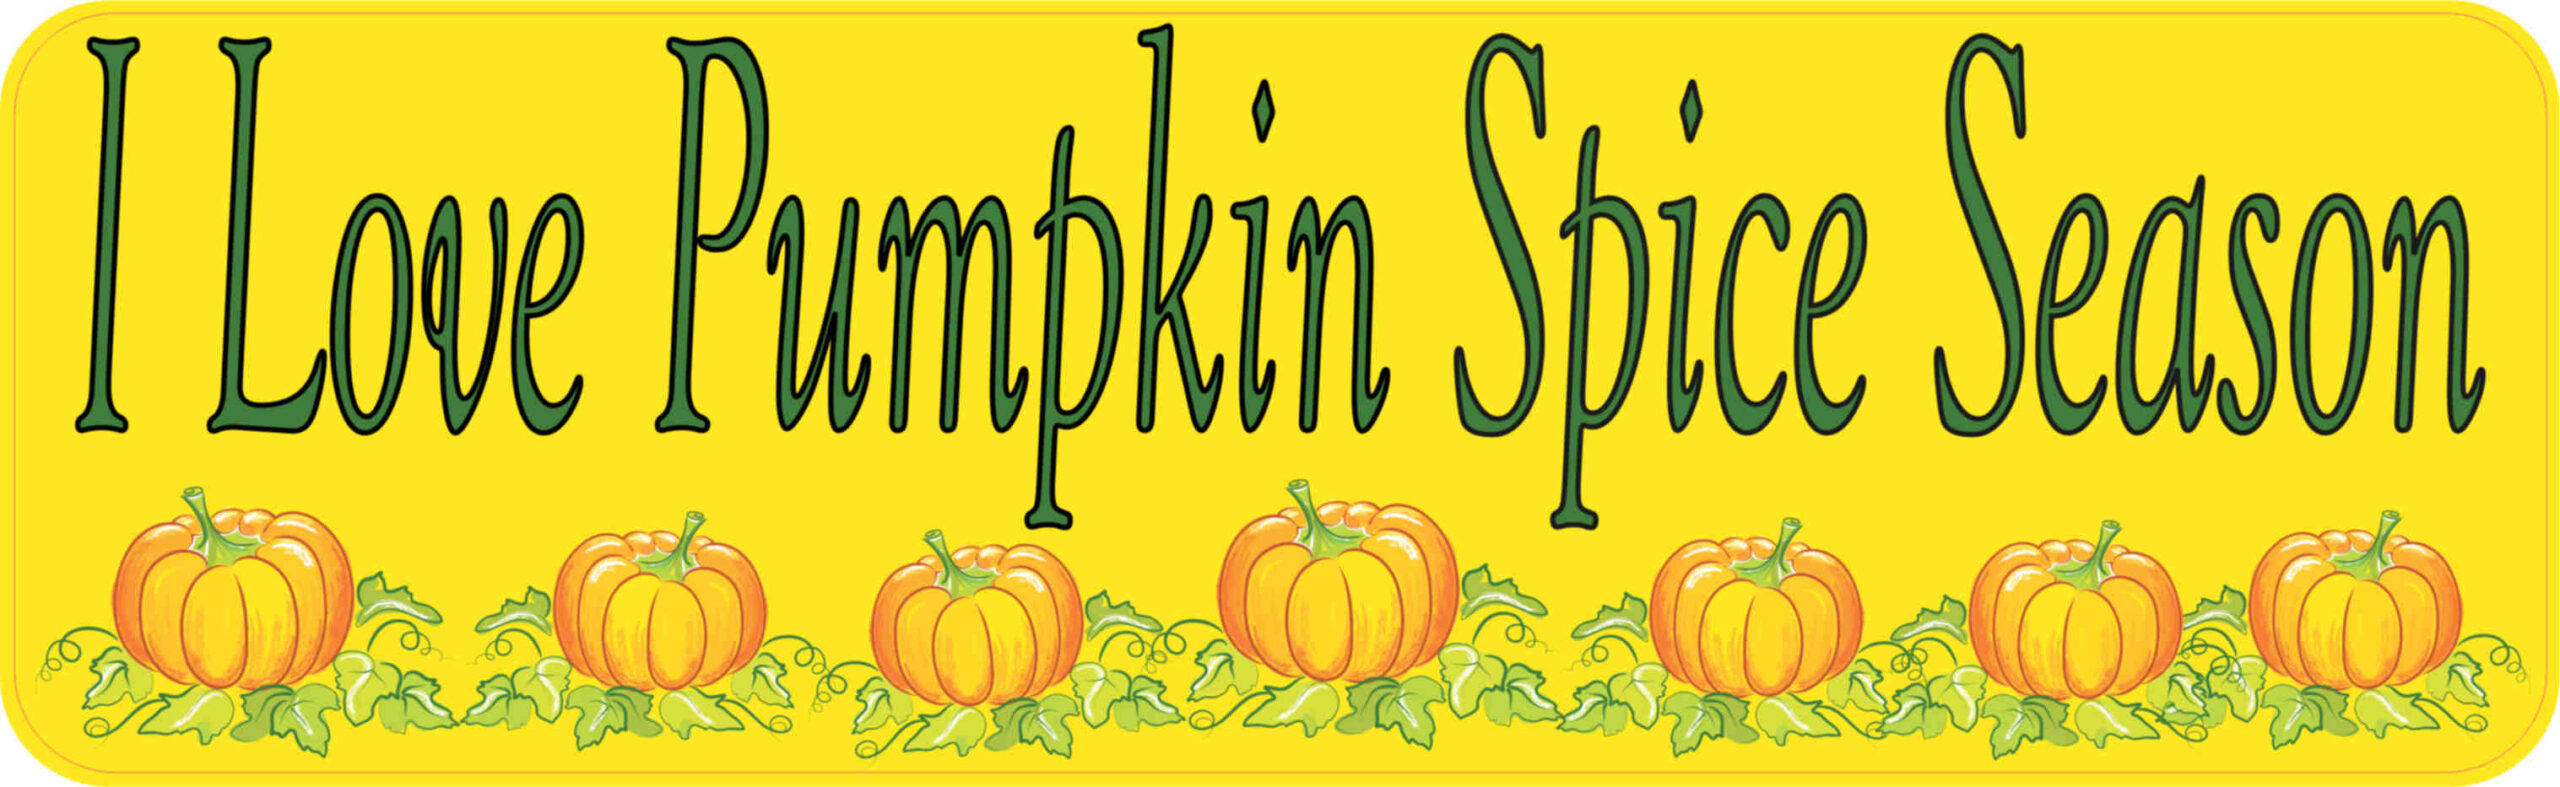 I Love Pumpkin Spice Season Bumper Sticker